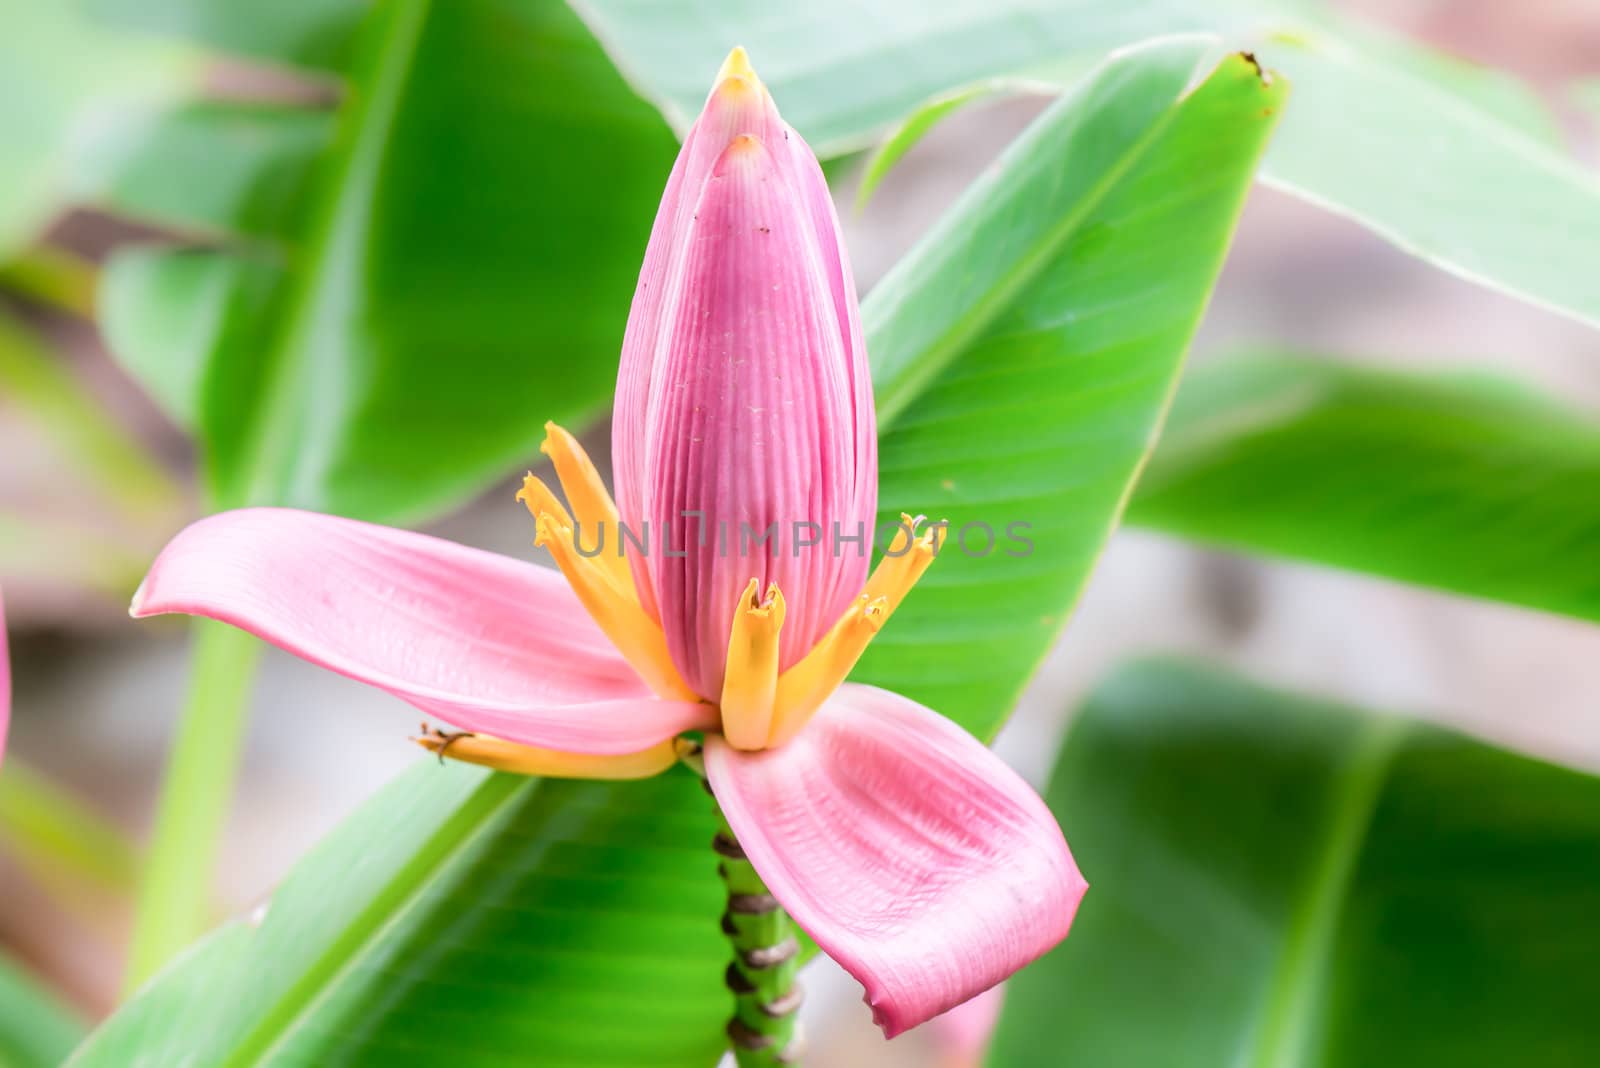 flower of pink musa ornata or flowering banana, lotus liked by wmitrmatr